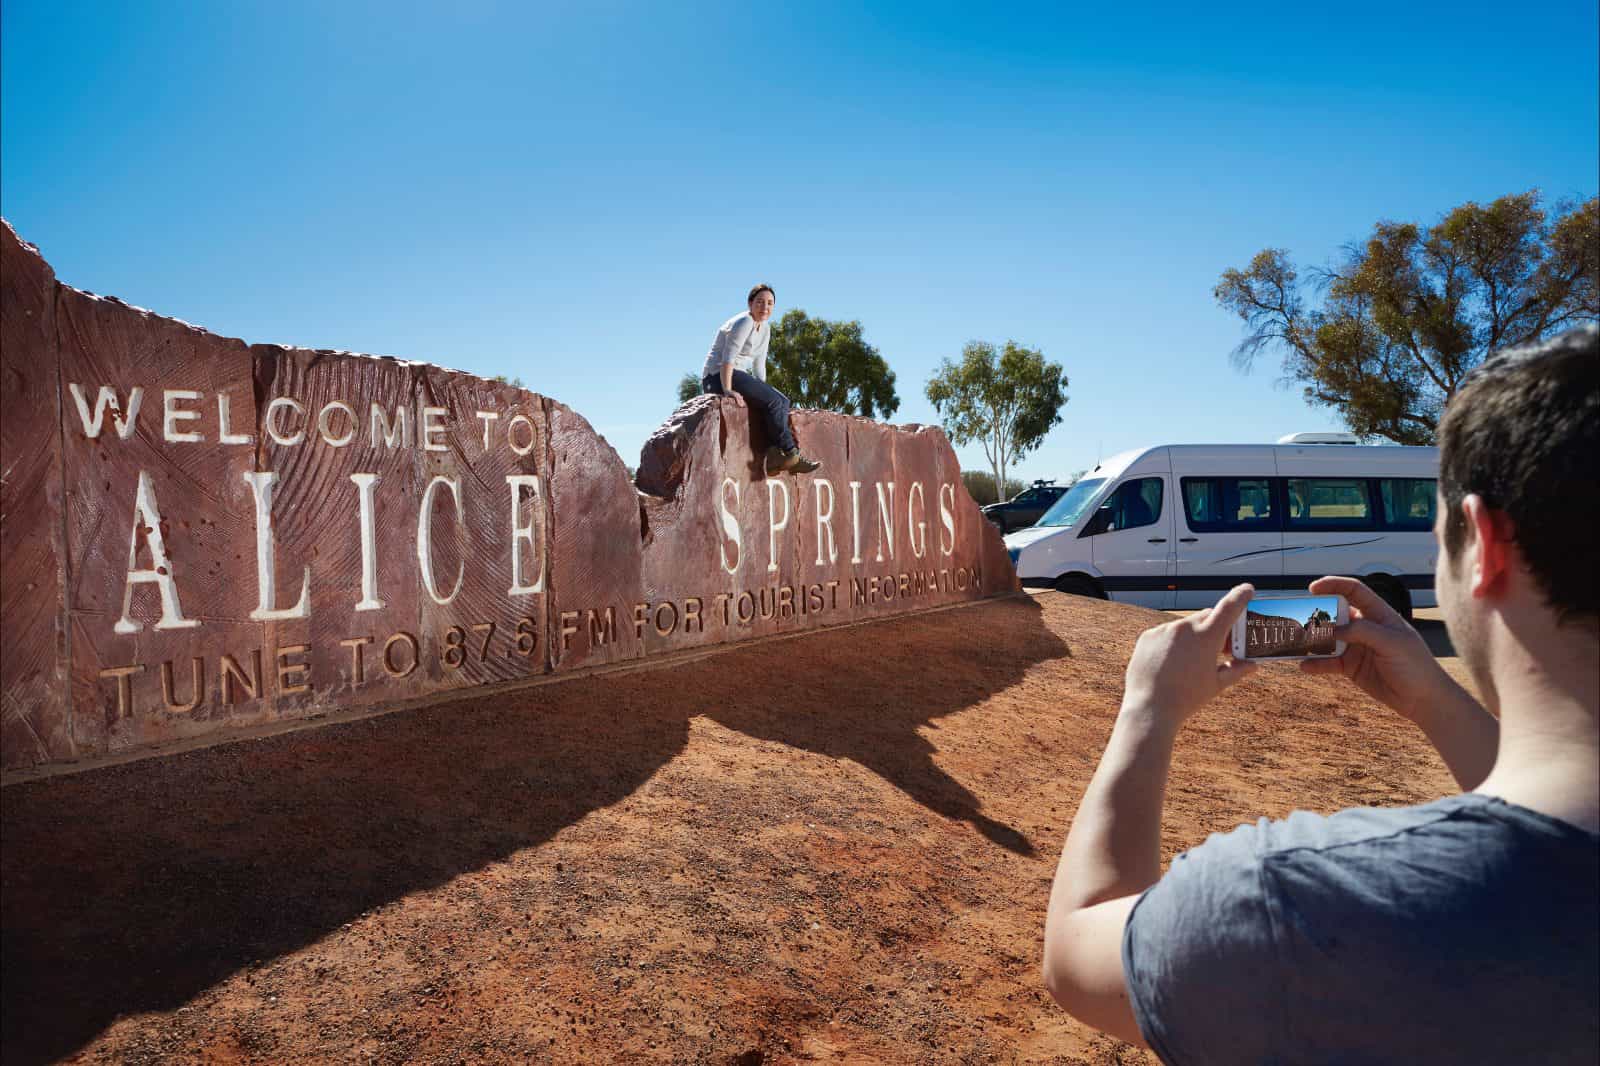 Apollo Euro Tourer in Alice Springs